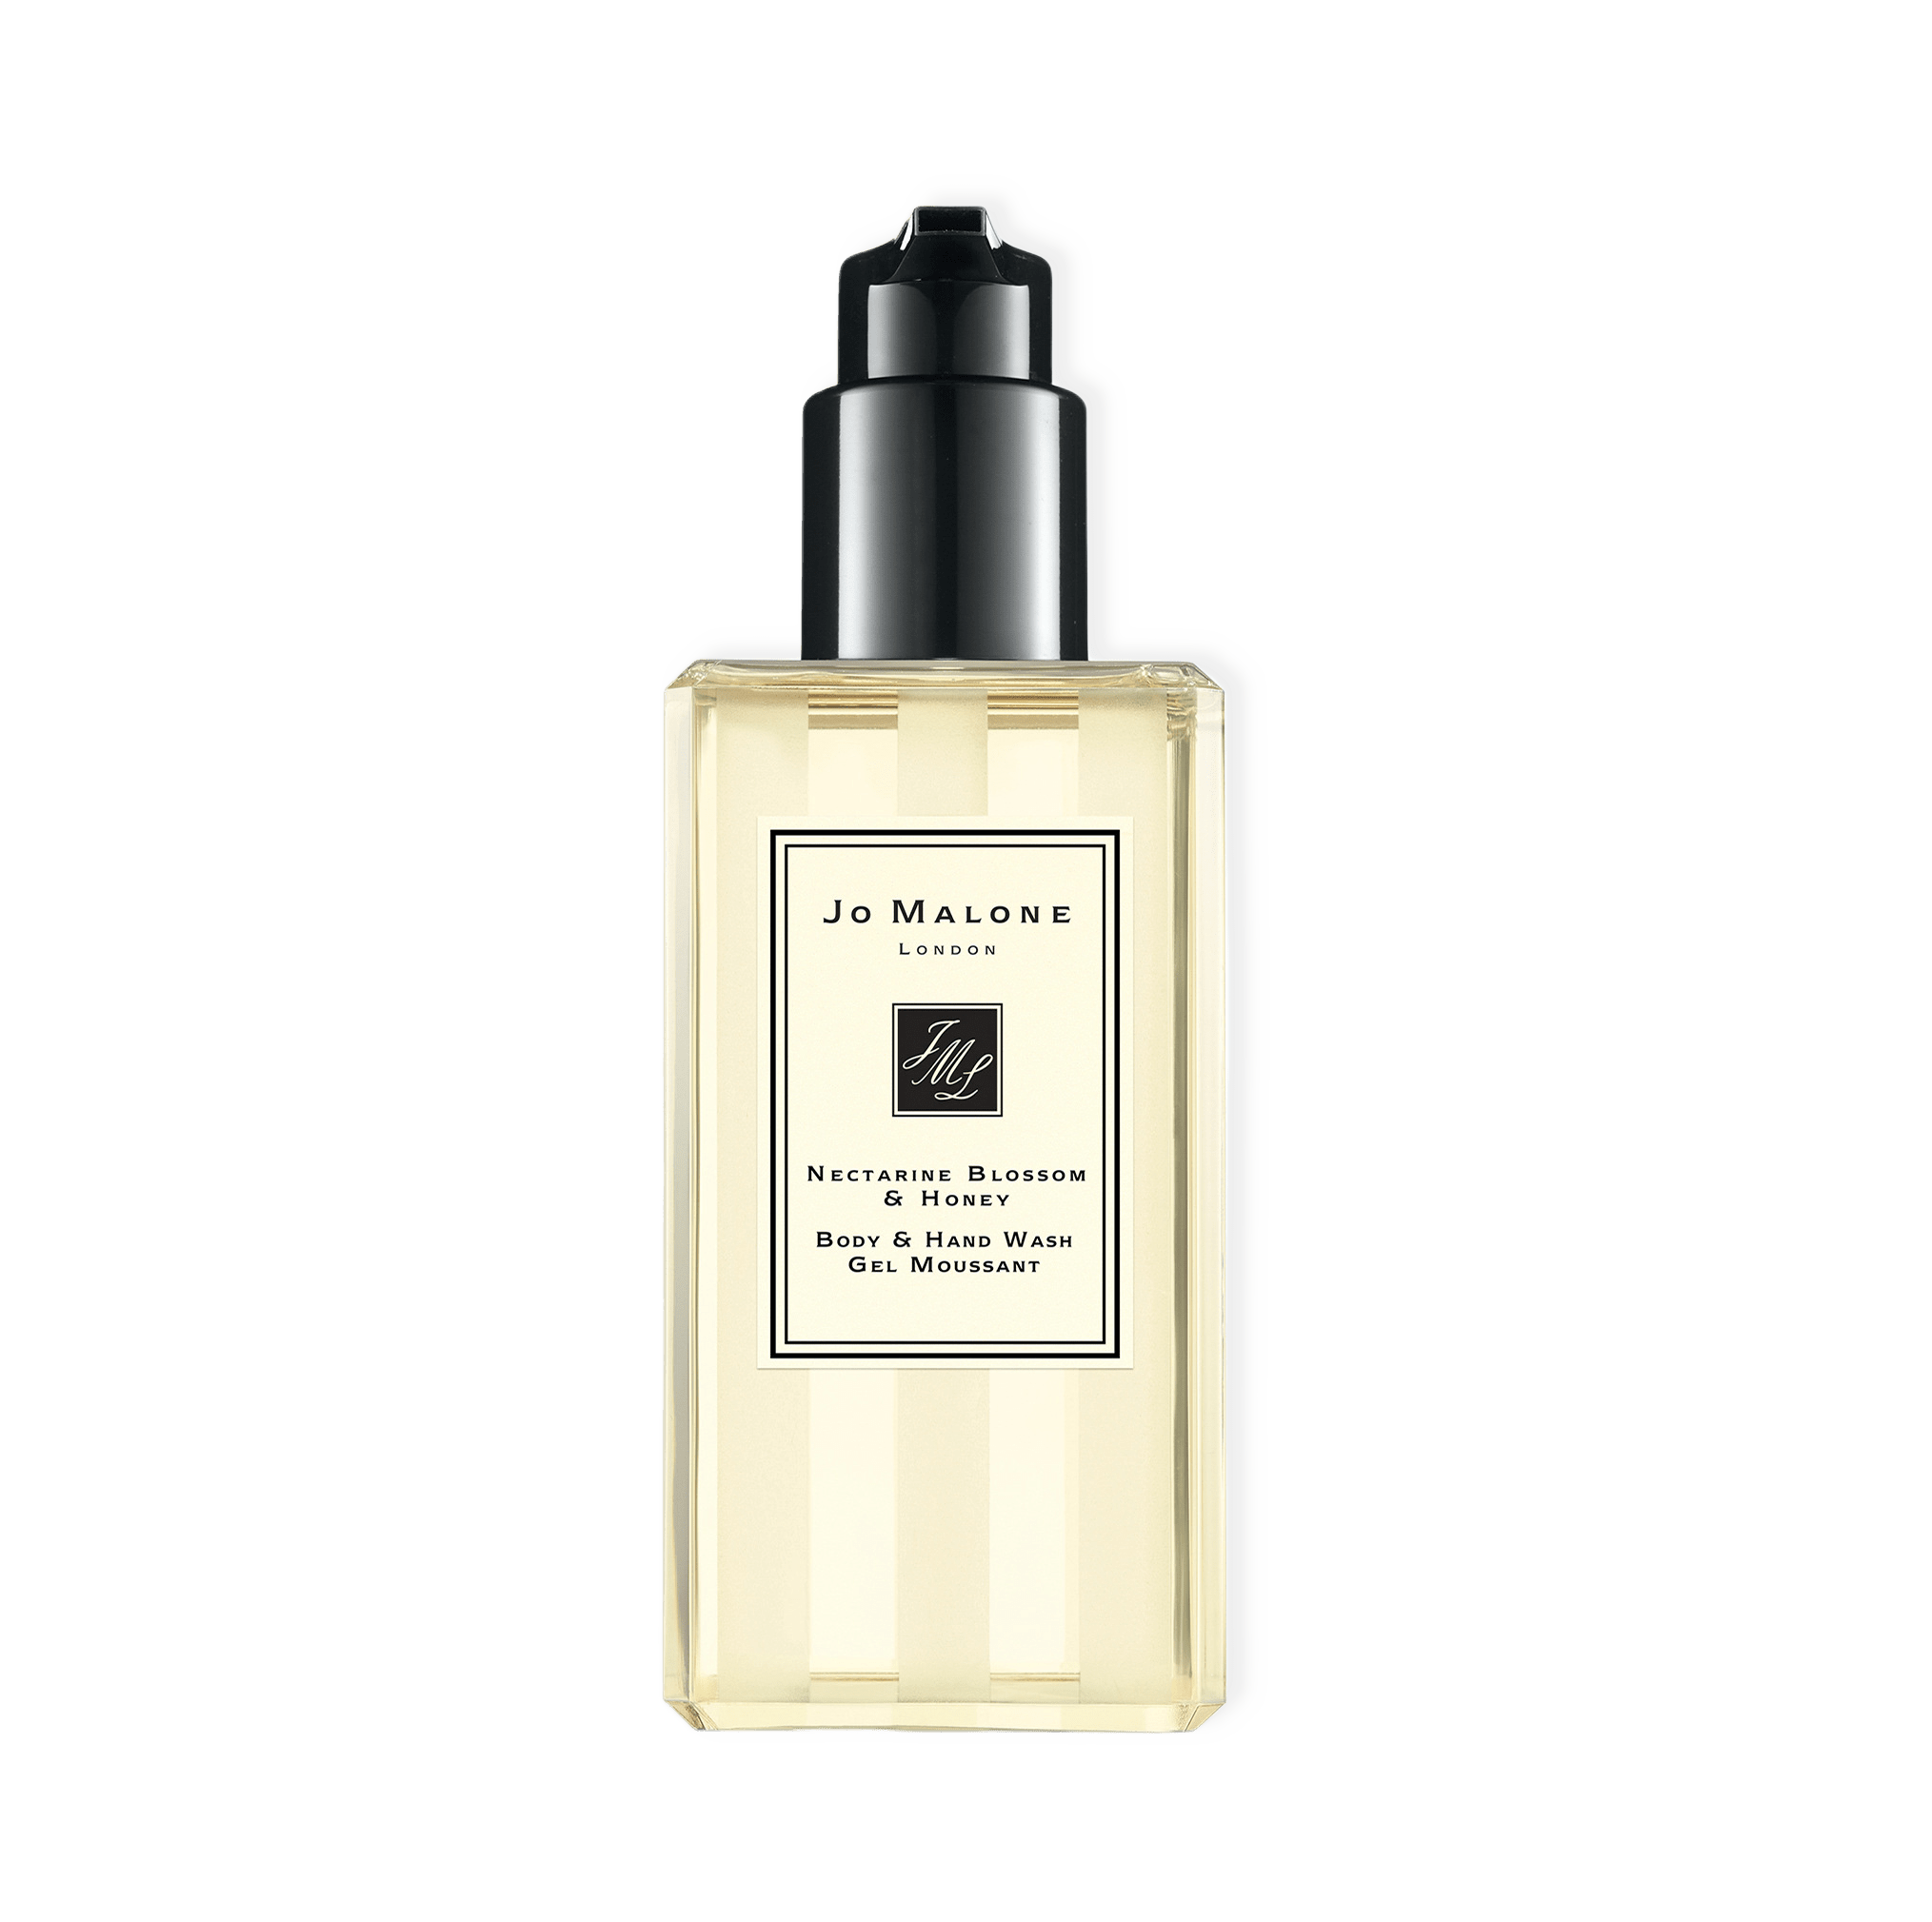 Nectarine Blossom & Honey Body & Hand Wash från Jo Malone London